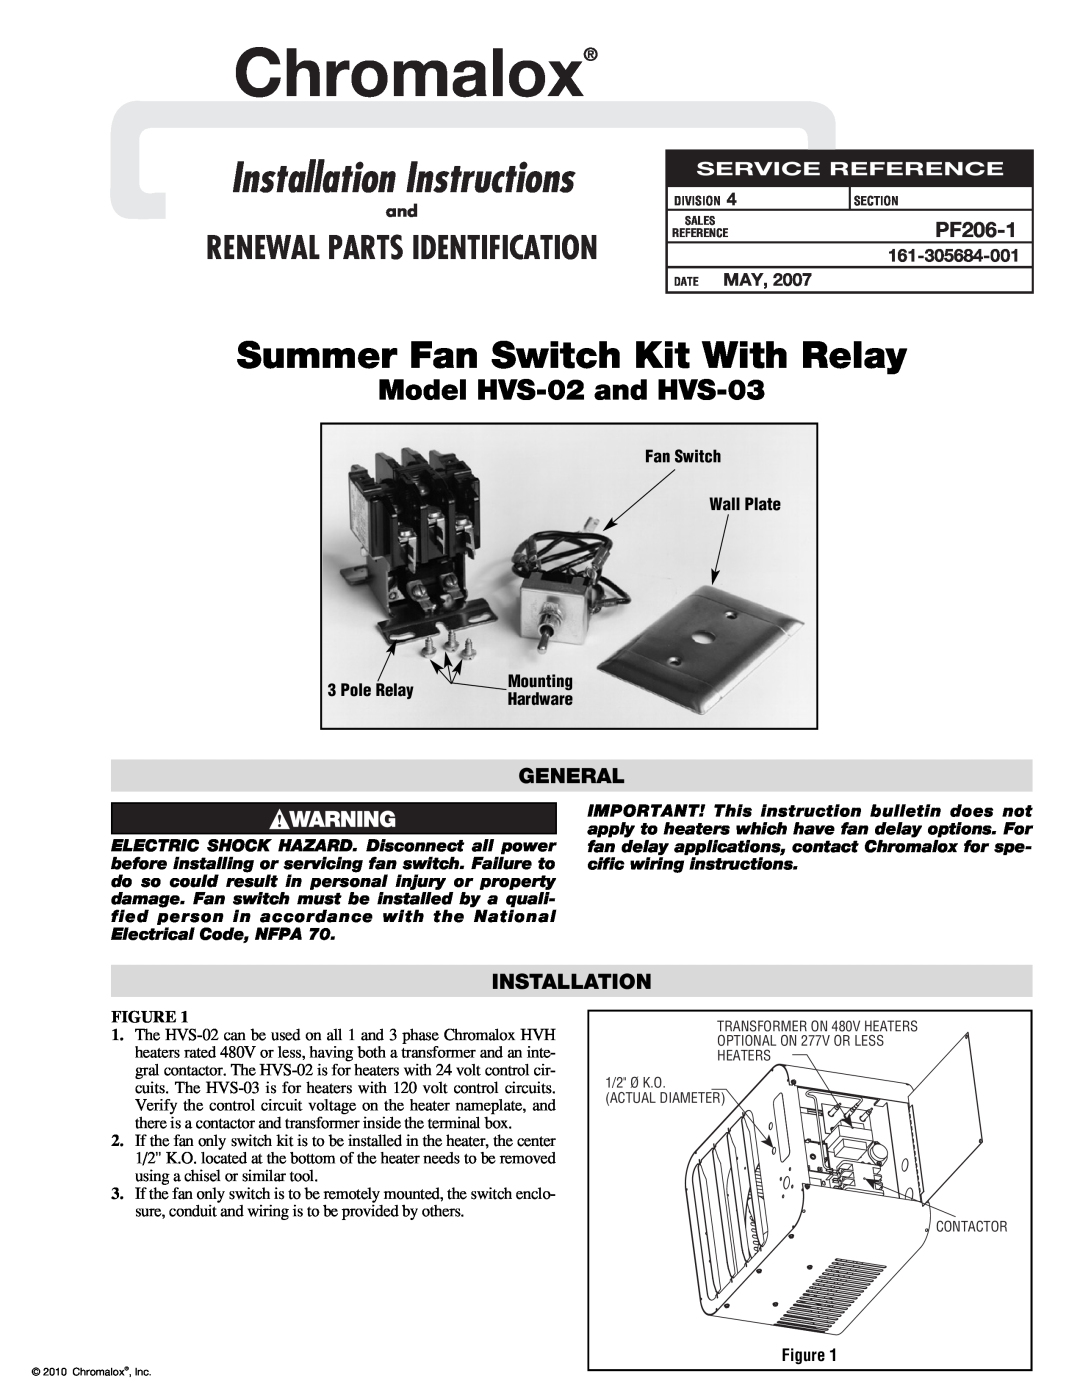 Chromalox HVS-02 installation instructions PF206-1, General, Installation, 161-305684-001, Date May, Fan Switch Wall Plate 